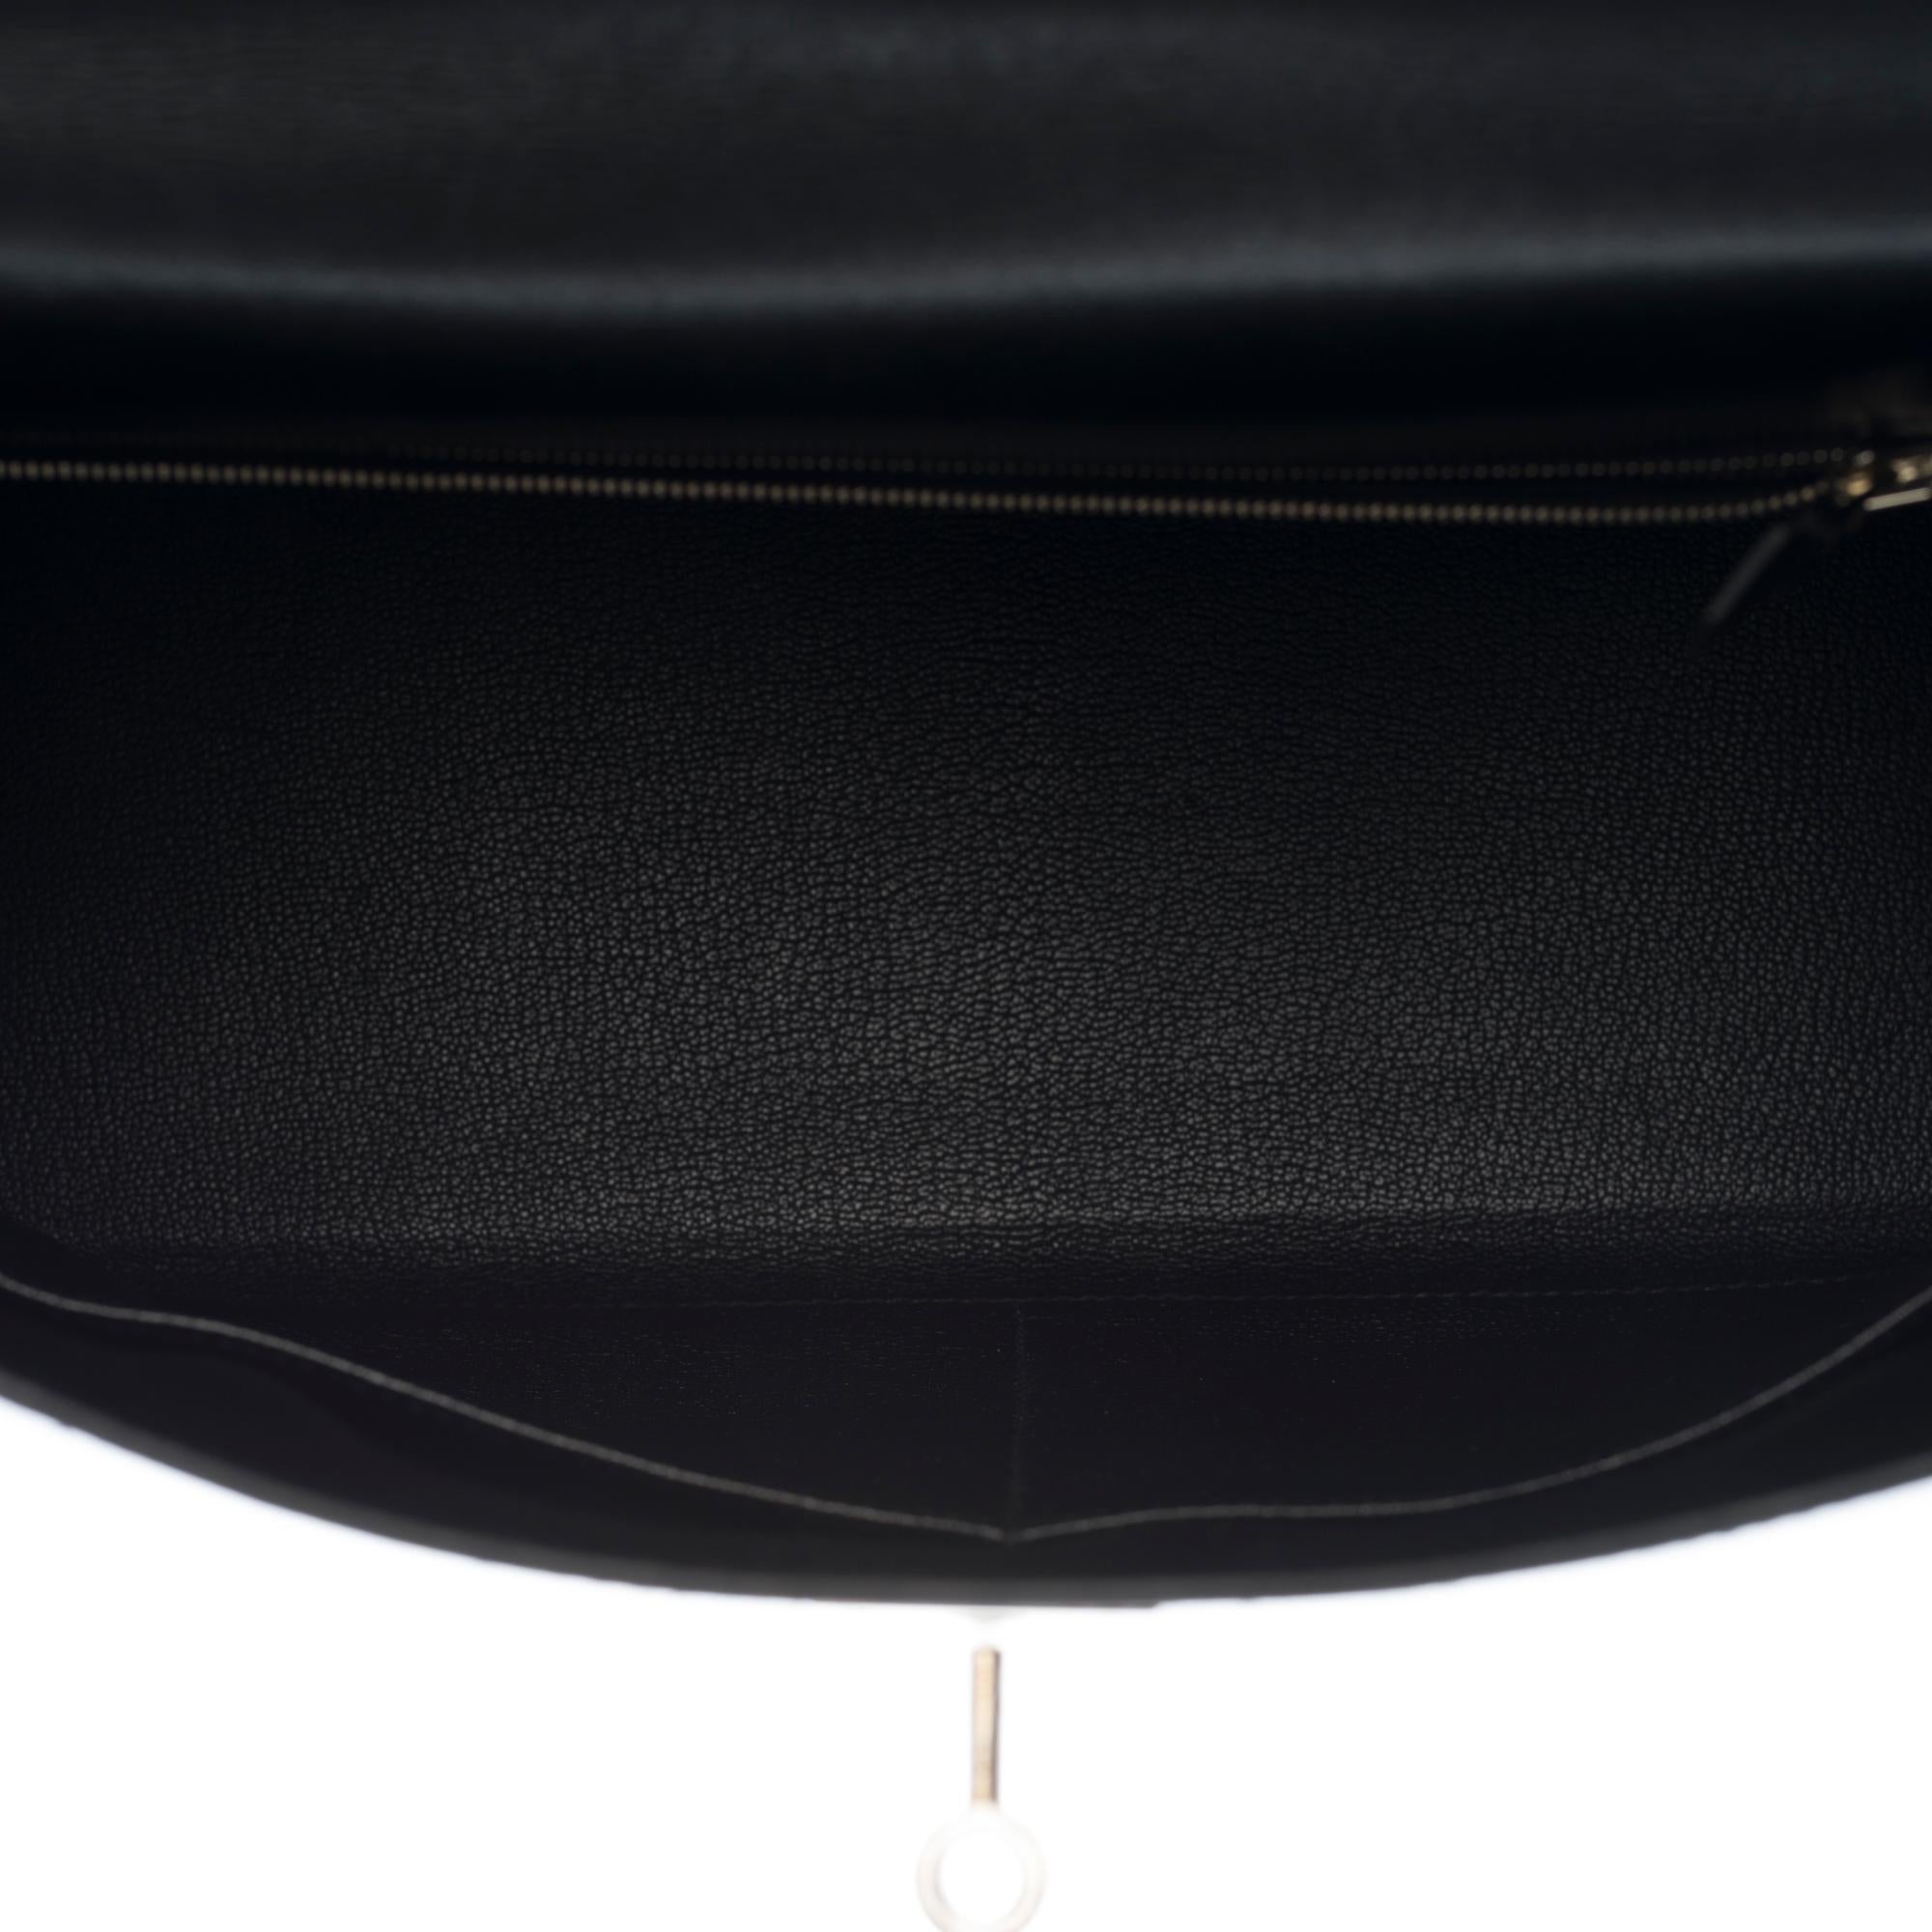 Rare Hermès Kelly 32 retourné handbag with strap in black calf leather, SHW 1